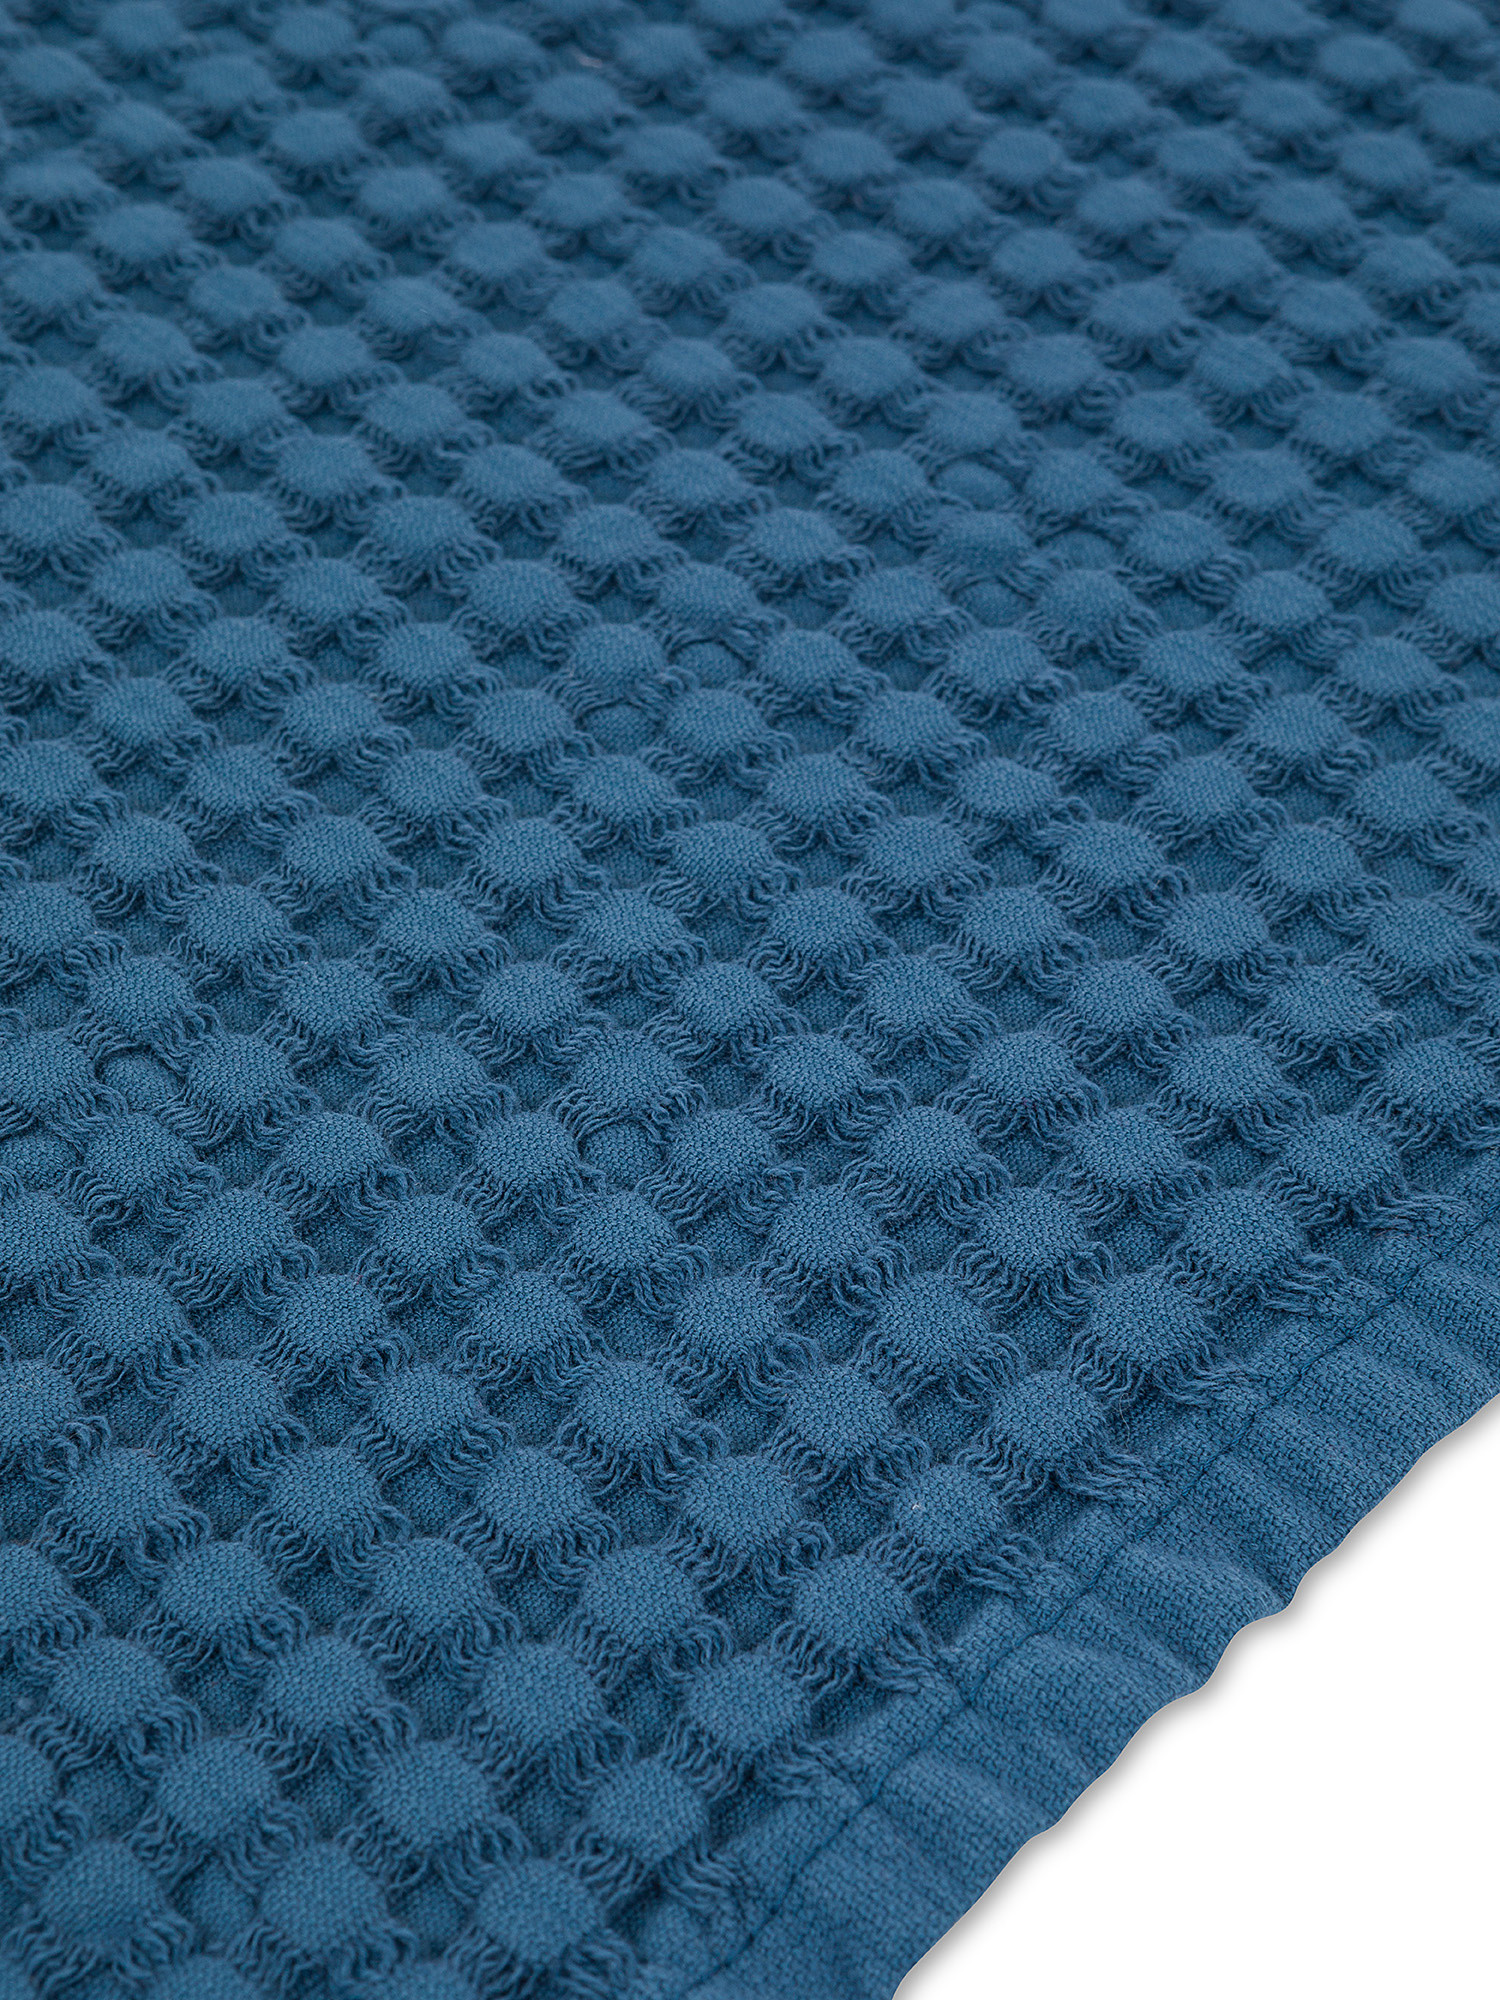 Asciugamano cotone nido d'ape, Blu scuro, large image number 2